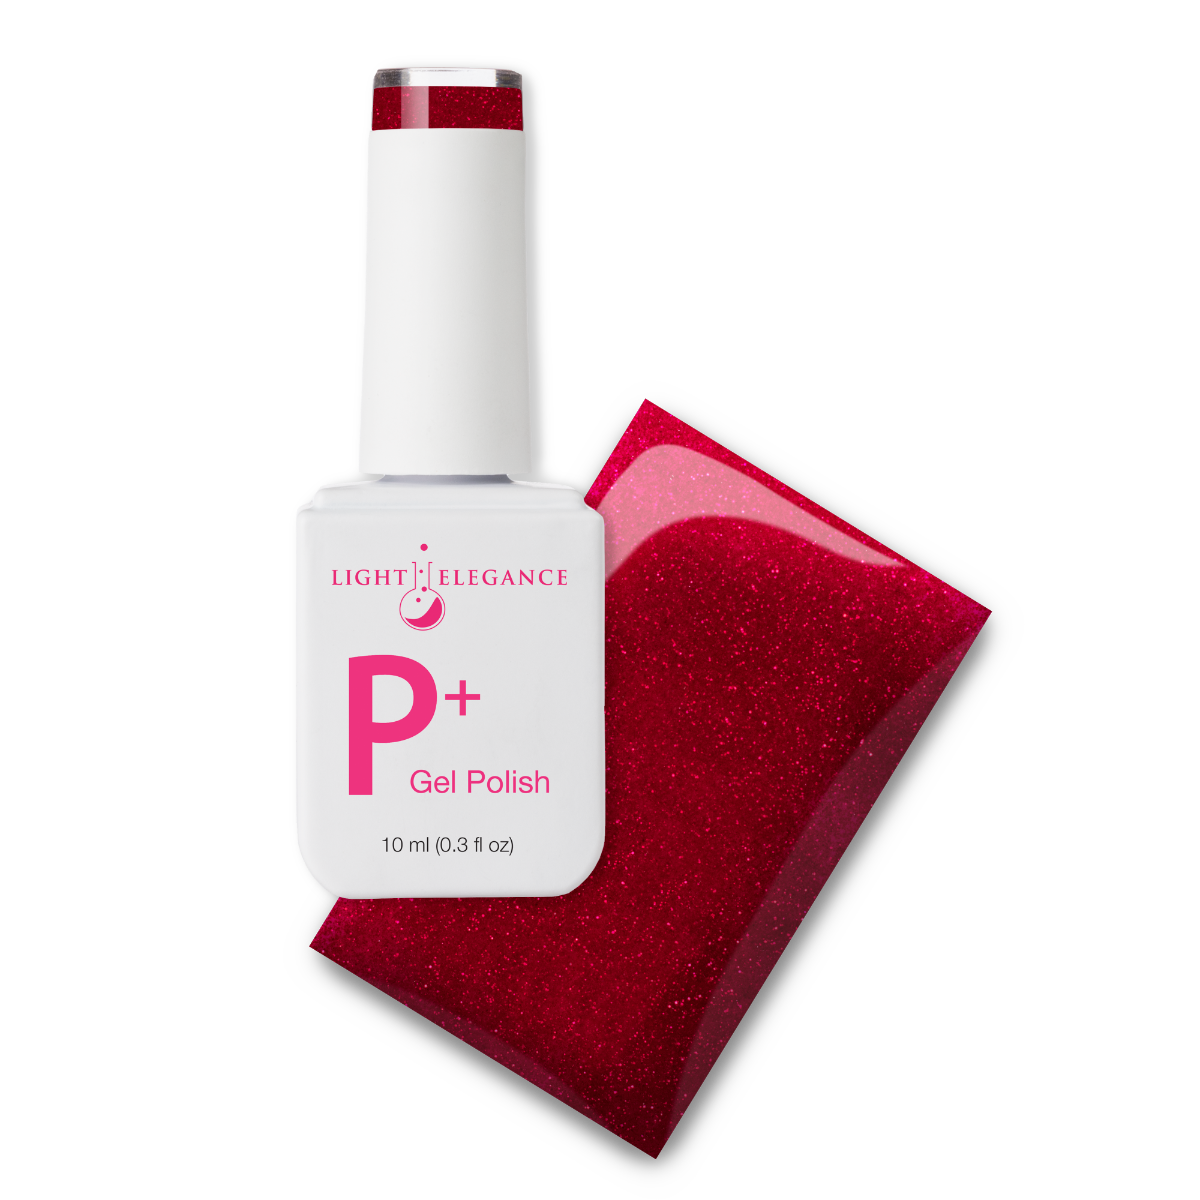 Light Elegance P+ Soak Off Glitter Gel - Red Chandelier :: New Packaging